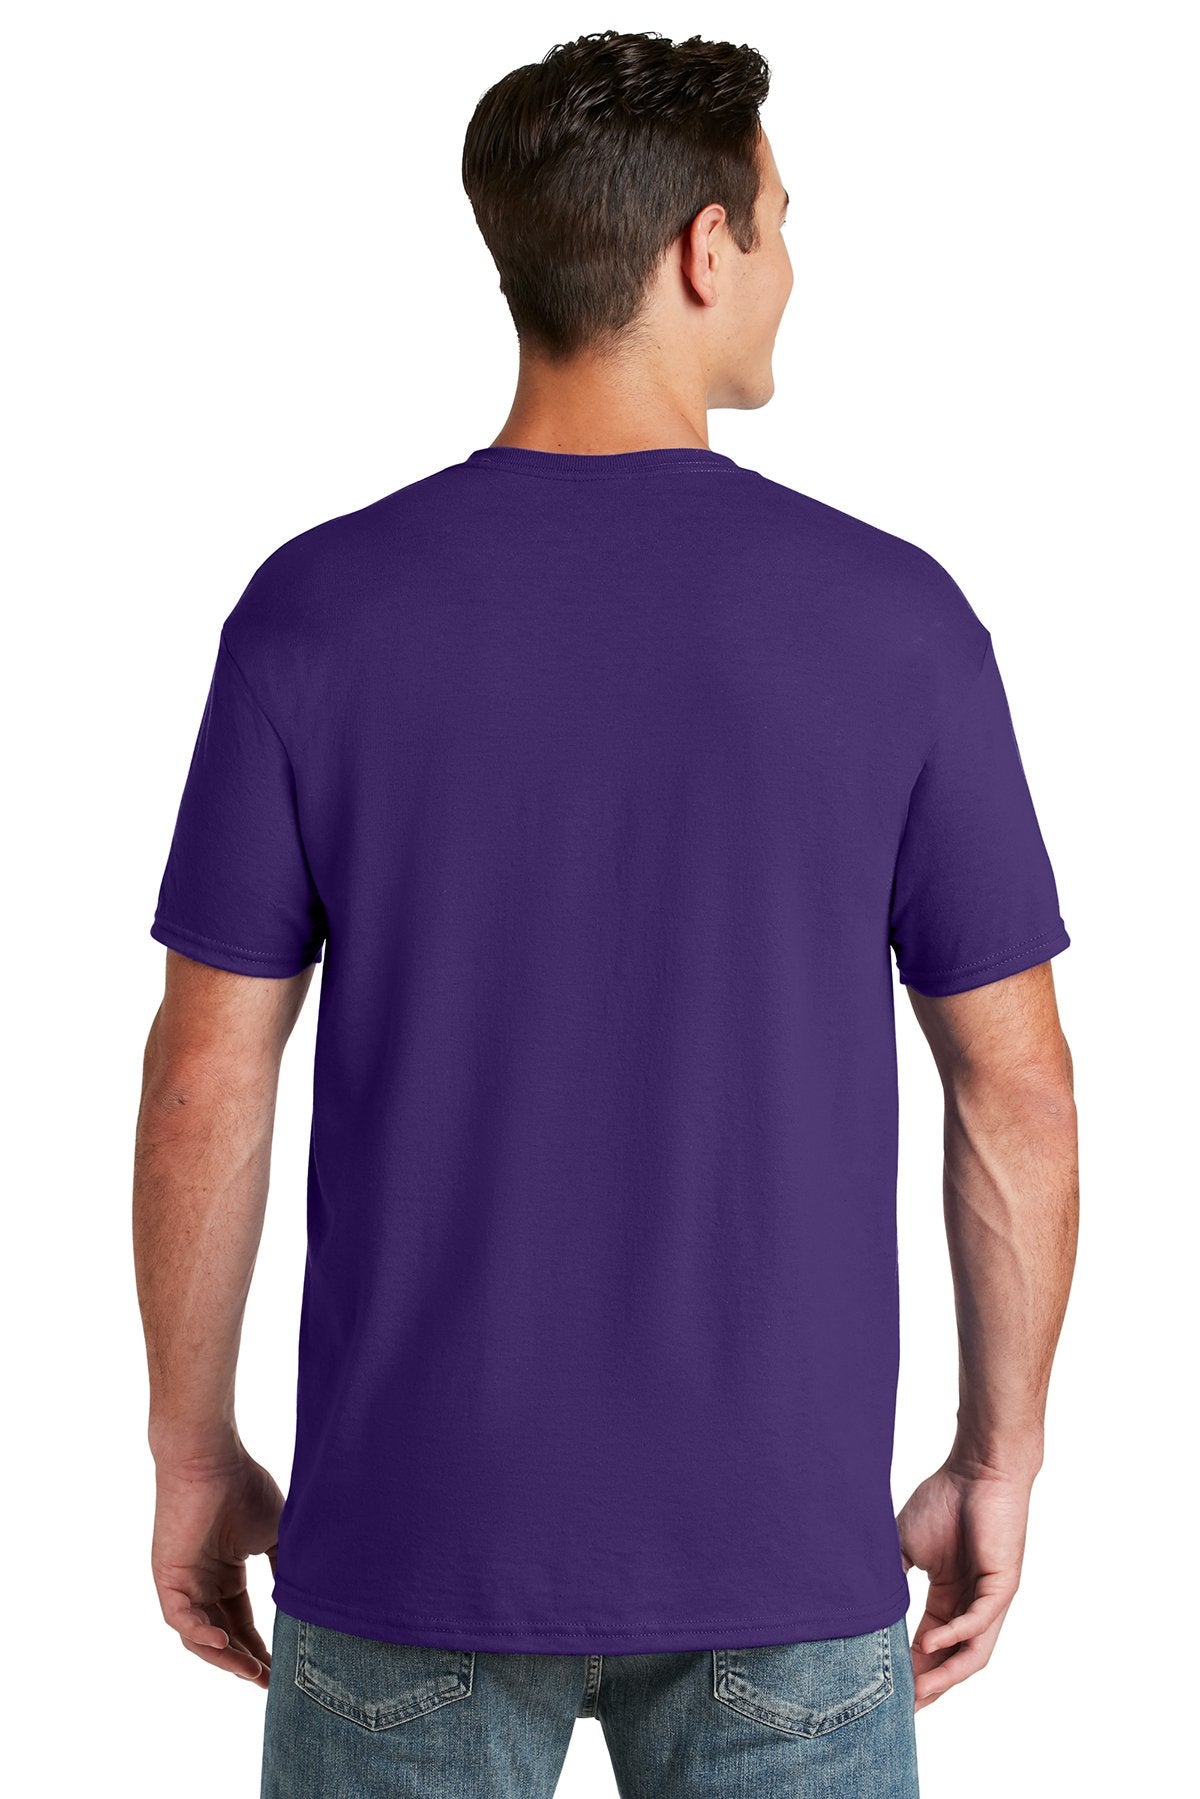 Jerzees Dri-Power Active 50/50 Cotton/Poly T-Shirt 29M Deep Purple